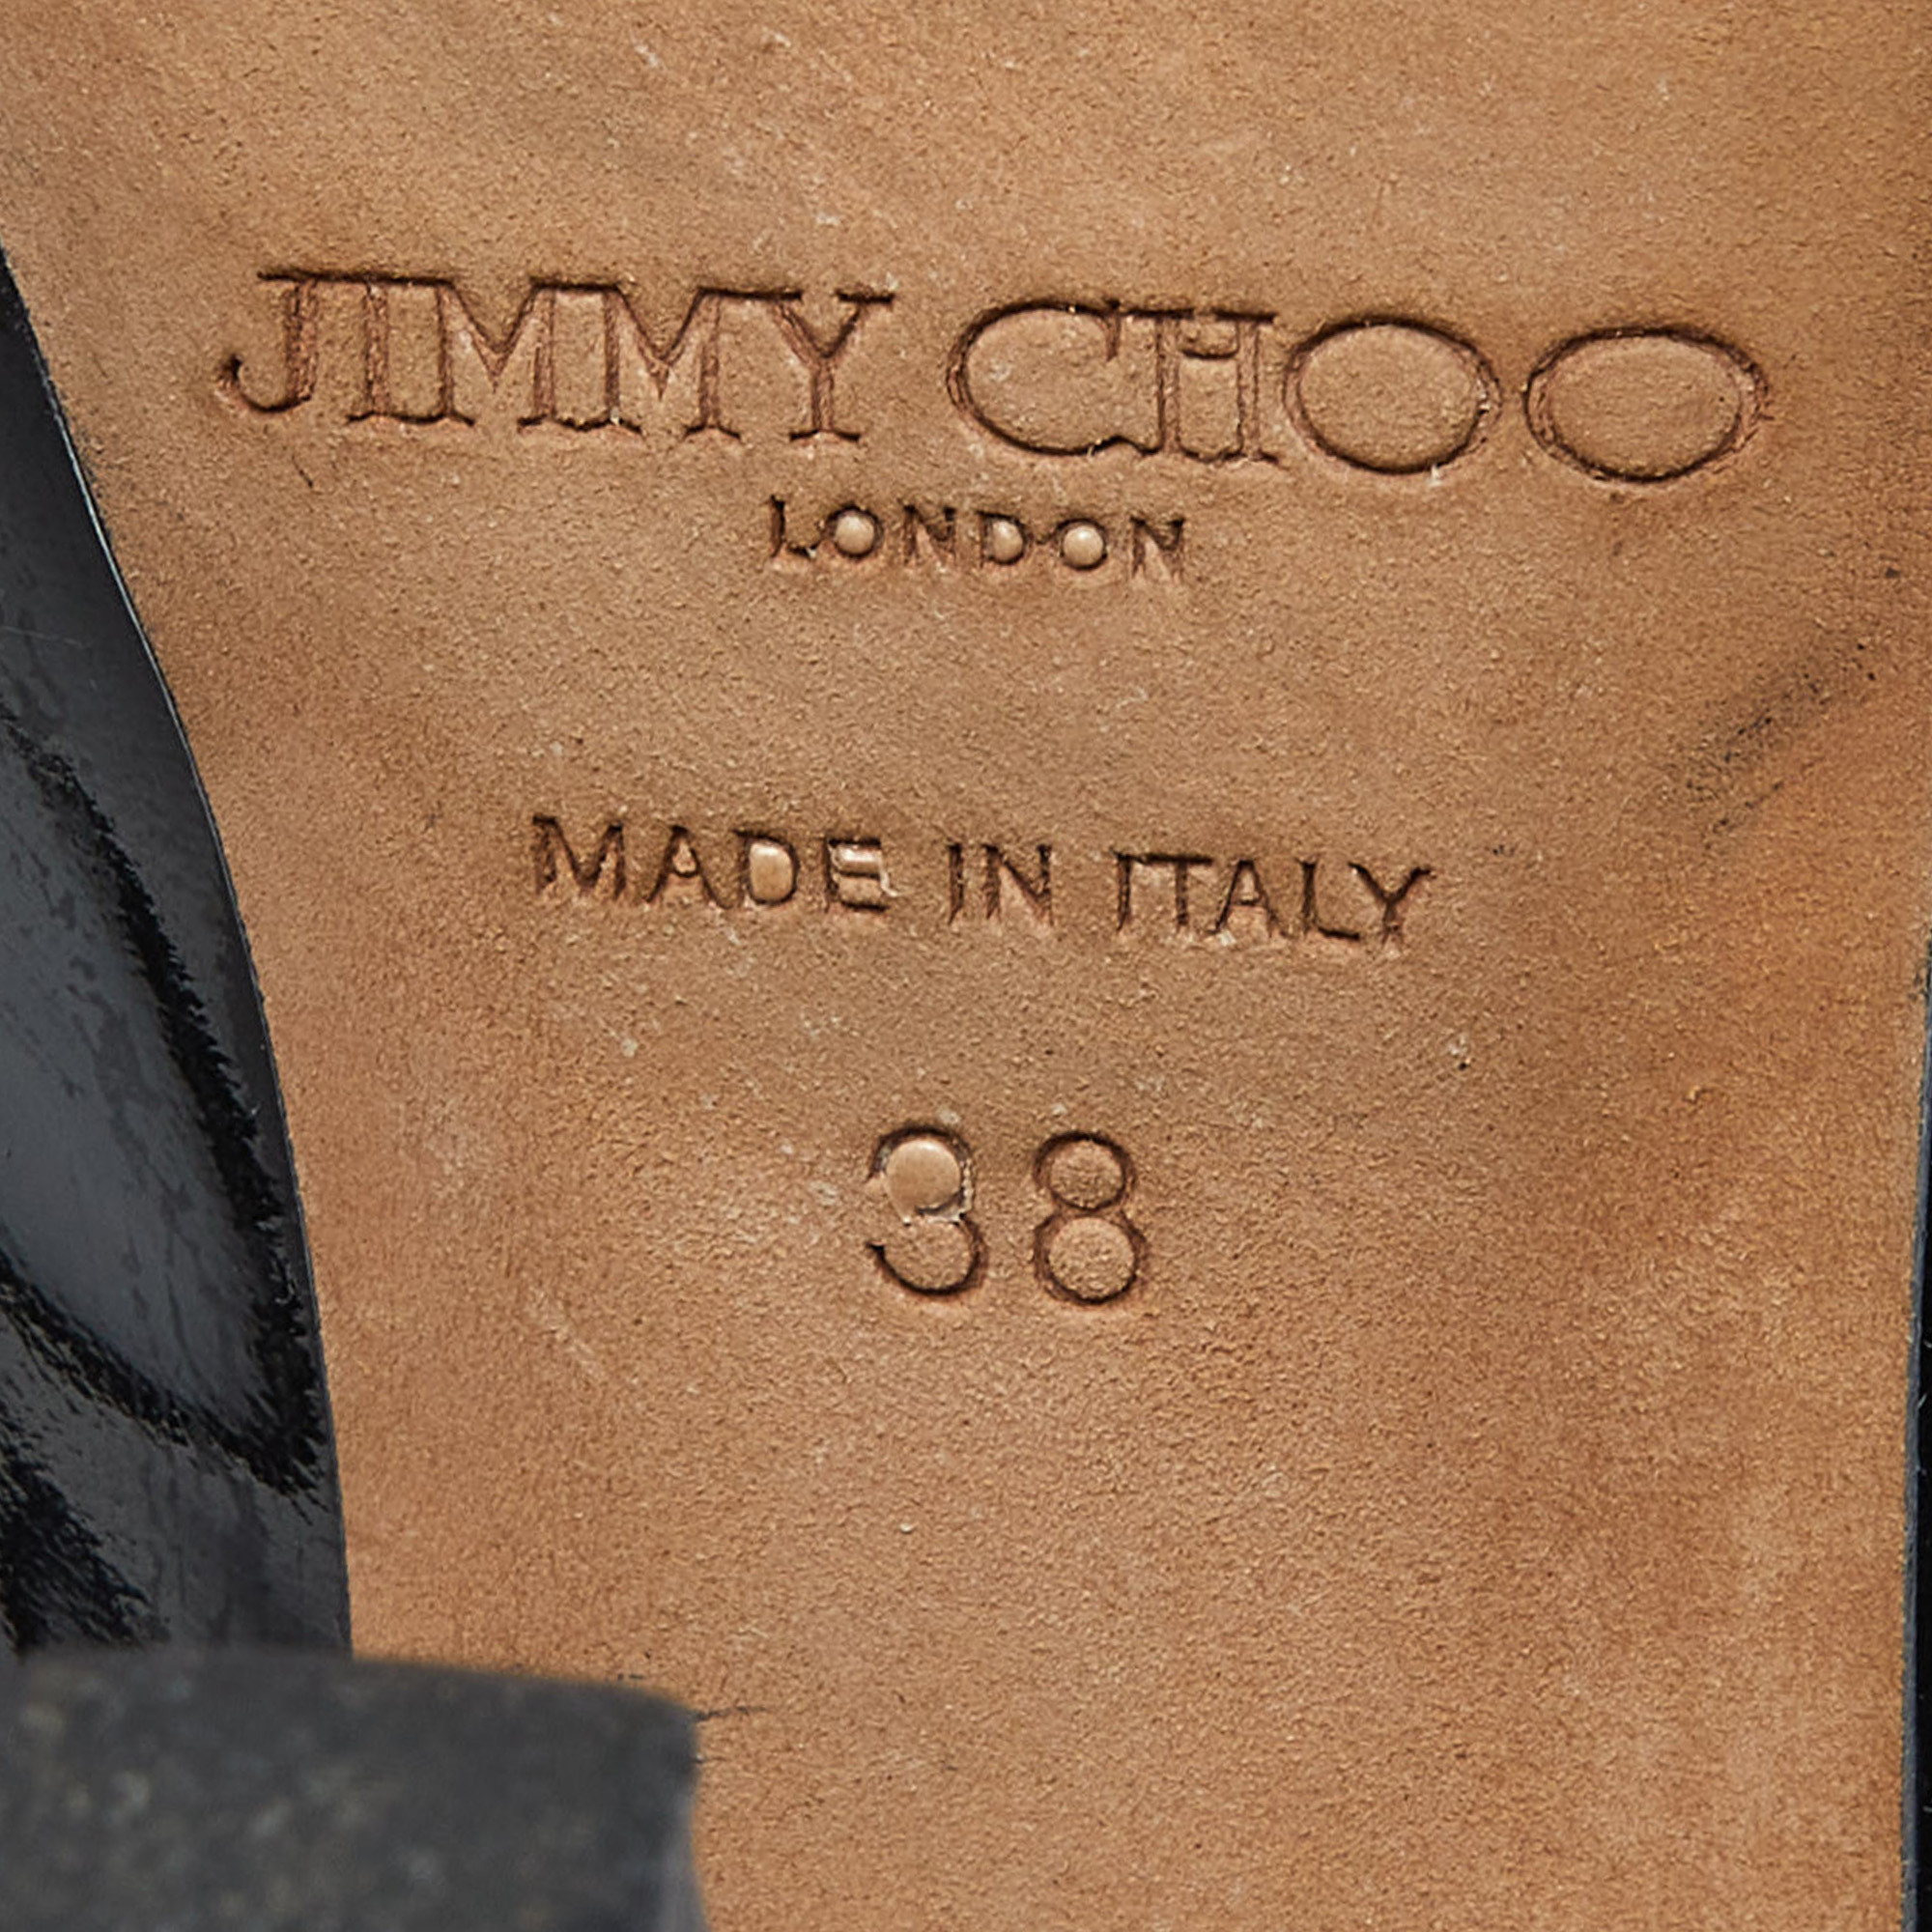 Jimmy Choo Black Patent Leather Peep Toe Platform Pumps Size 38